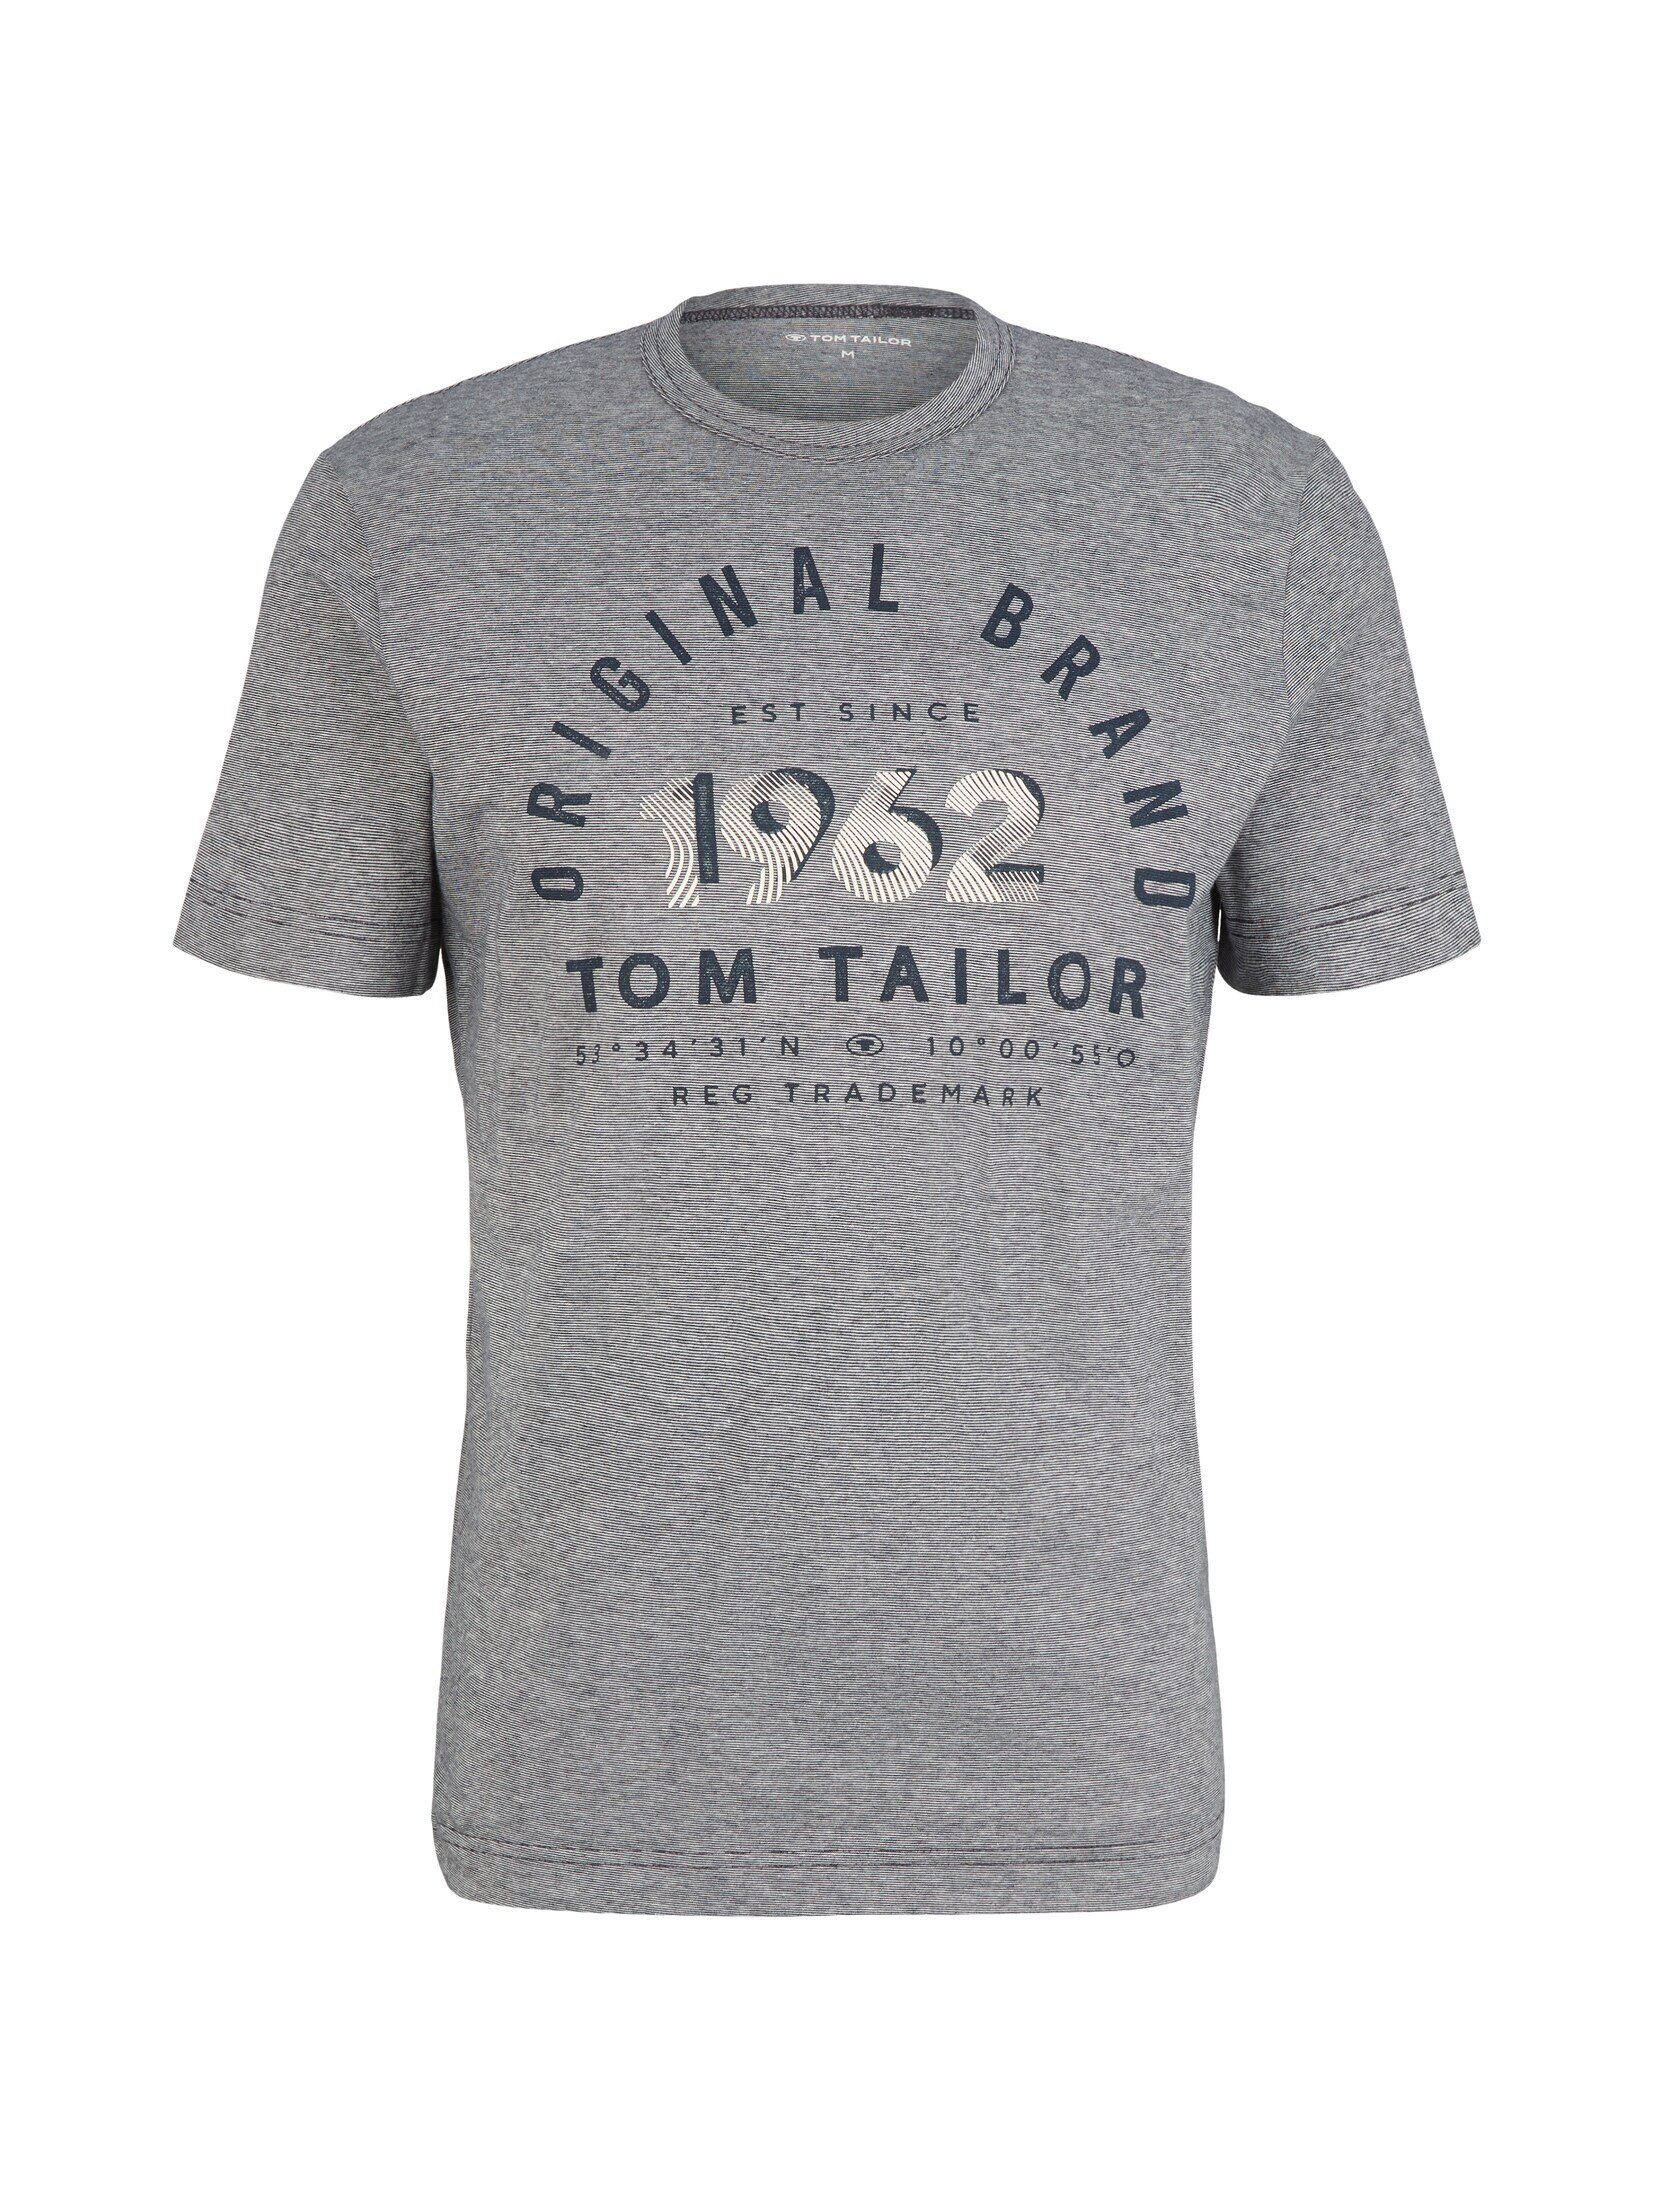 mit thin navy TAILOR TOM offwhite T-Shirt Print stripe T-Shirt